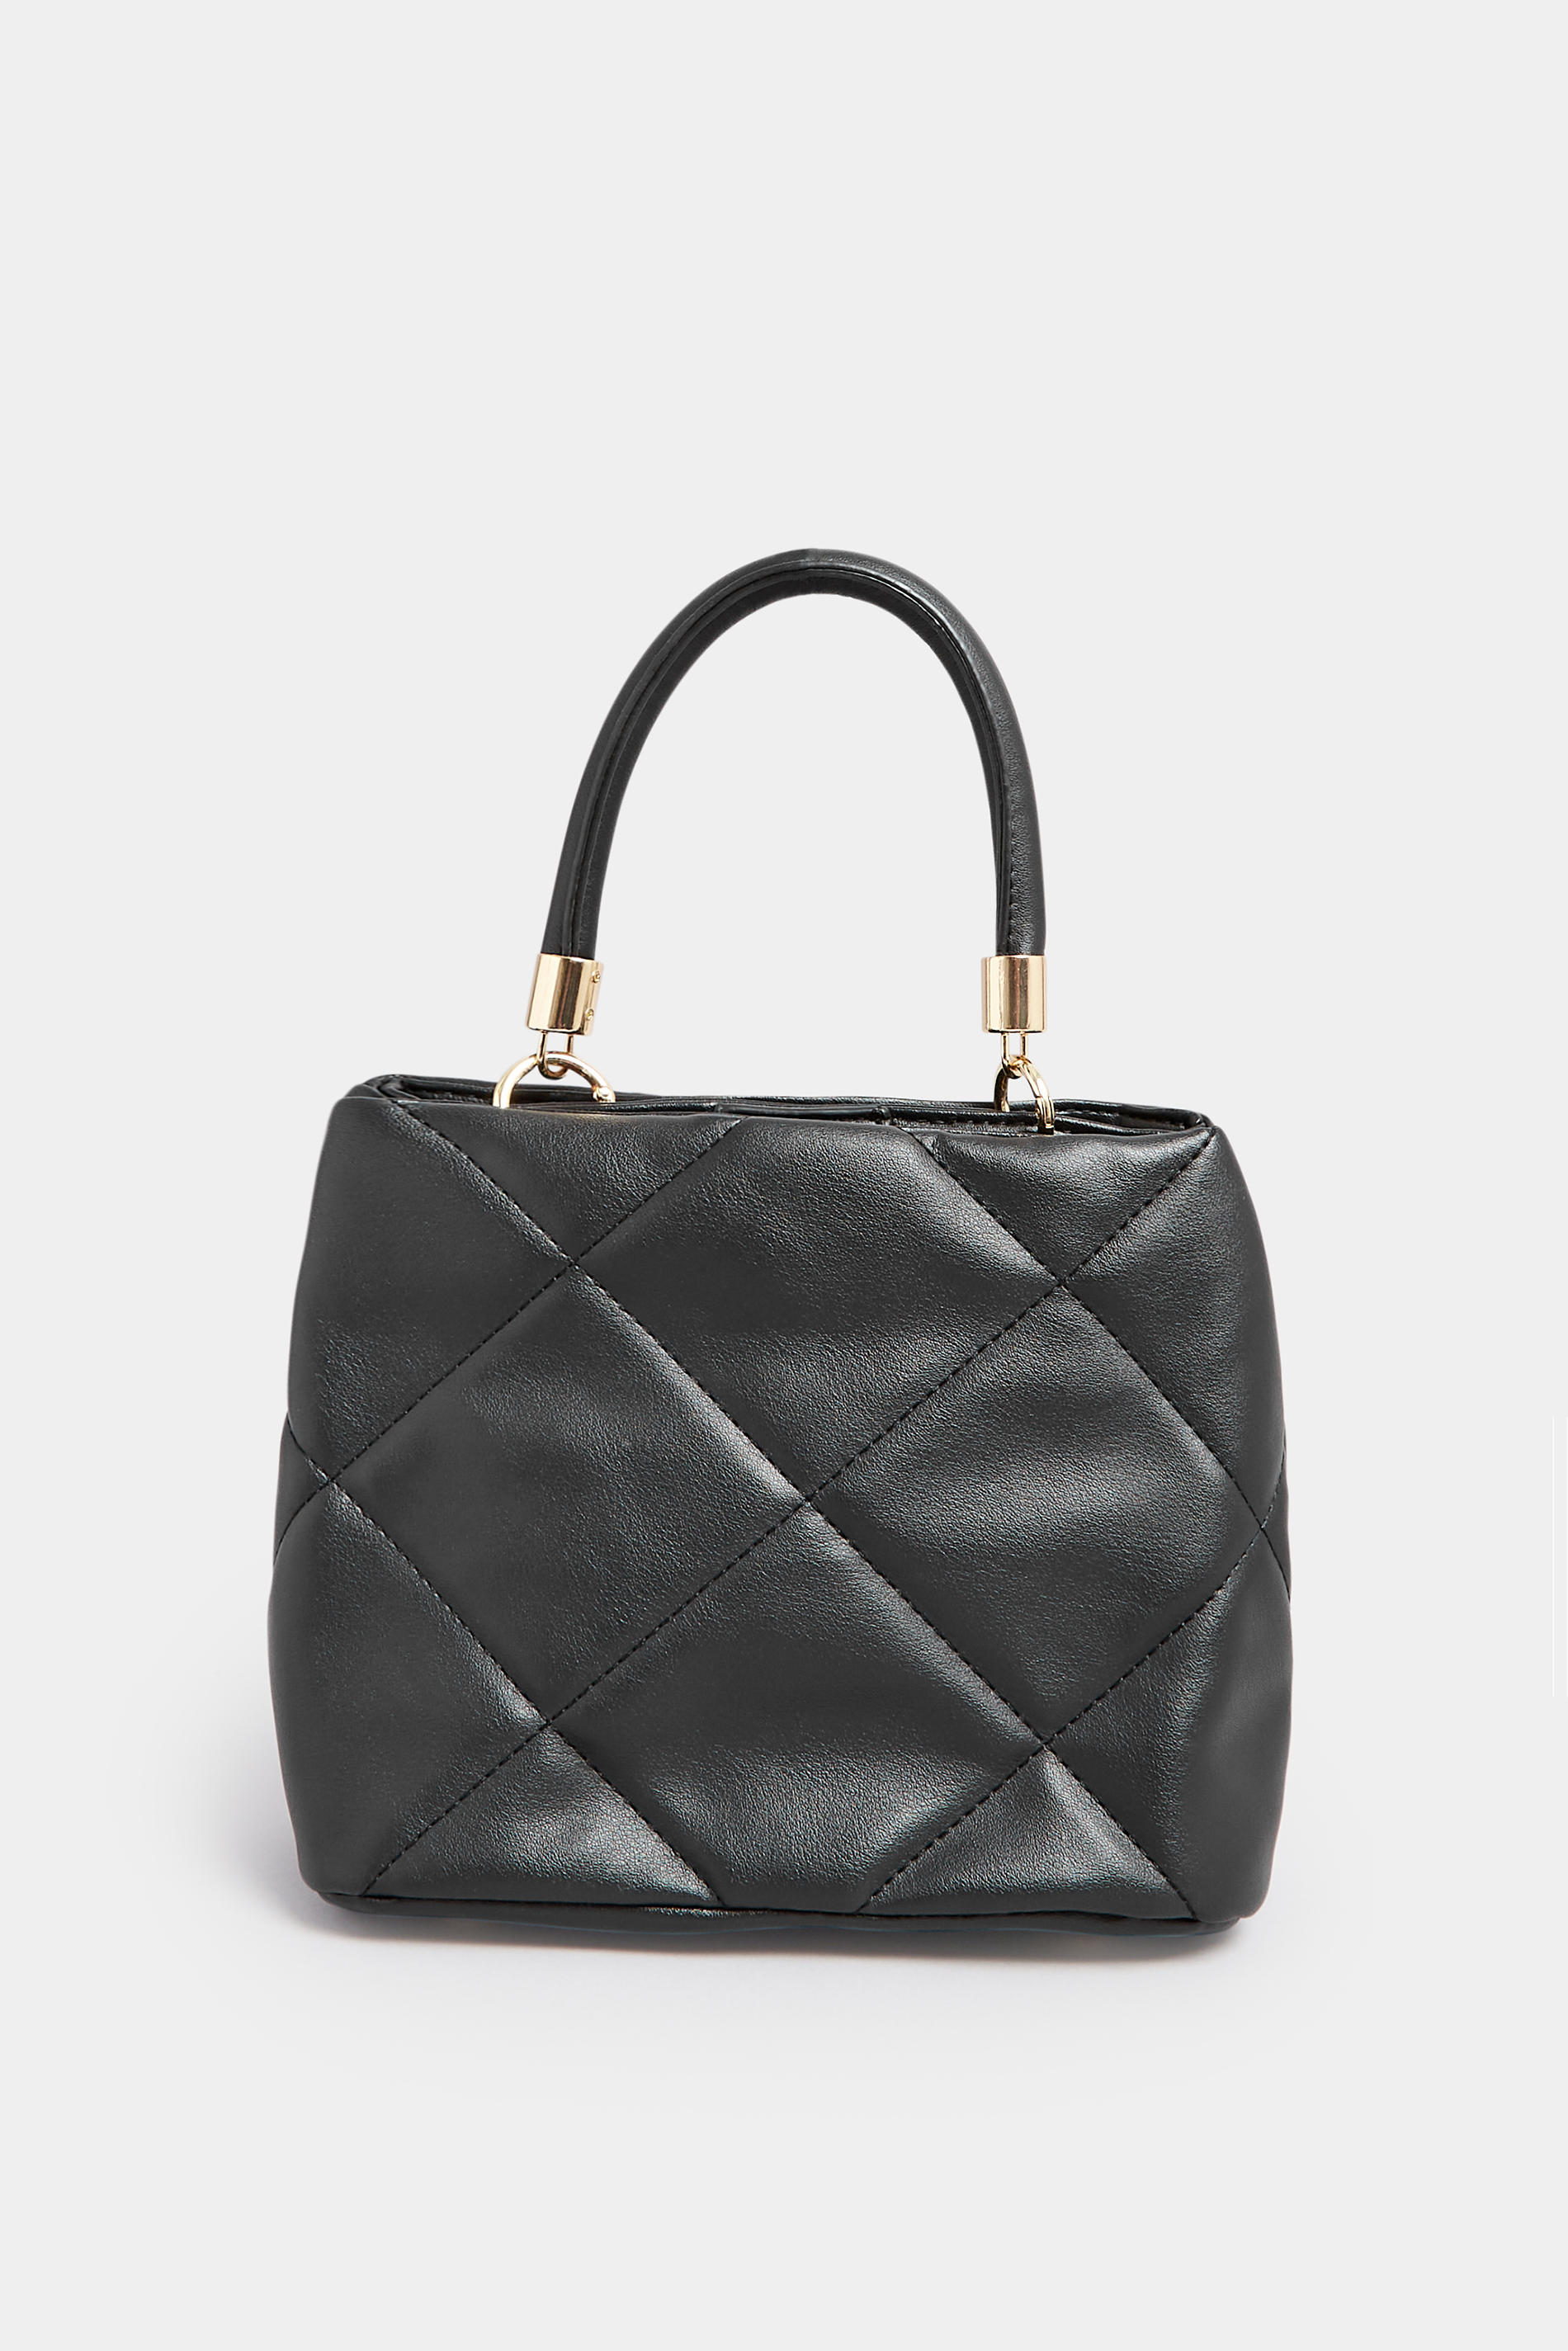 HOBO Darcy Leather Studded Strap Crossbody Bag | Dillard's